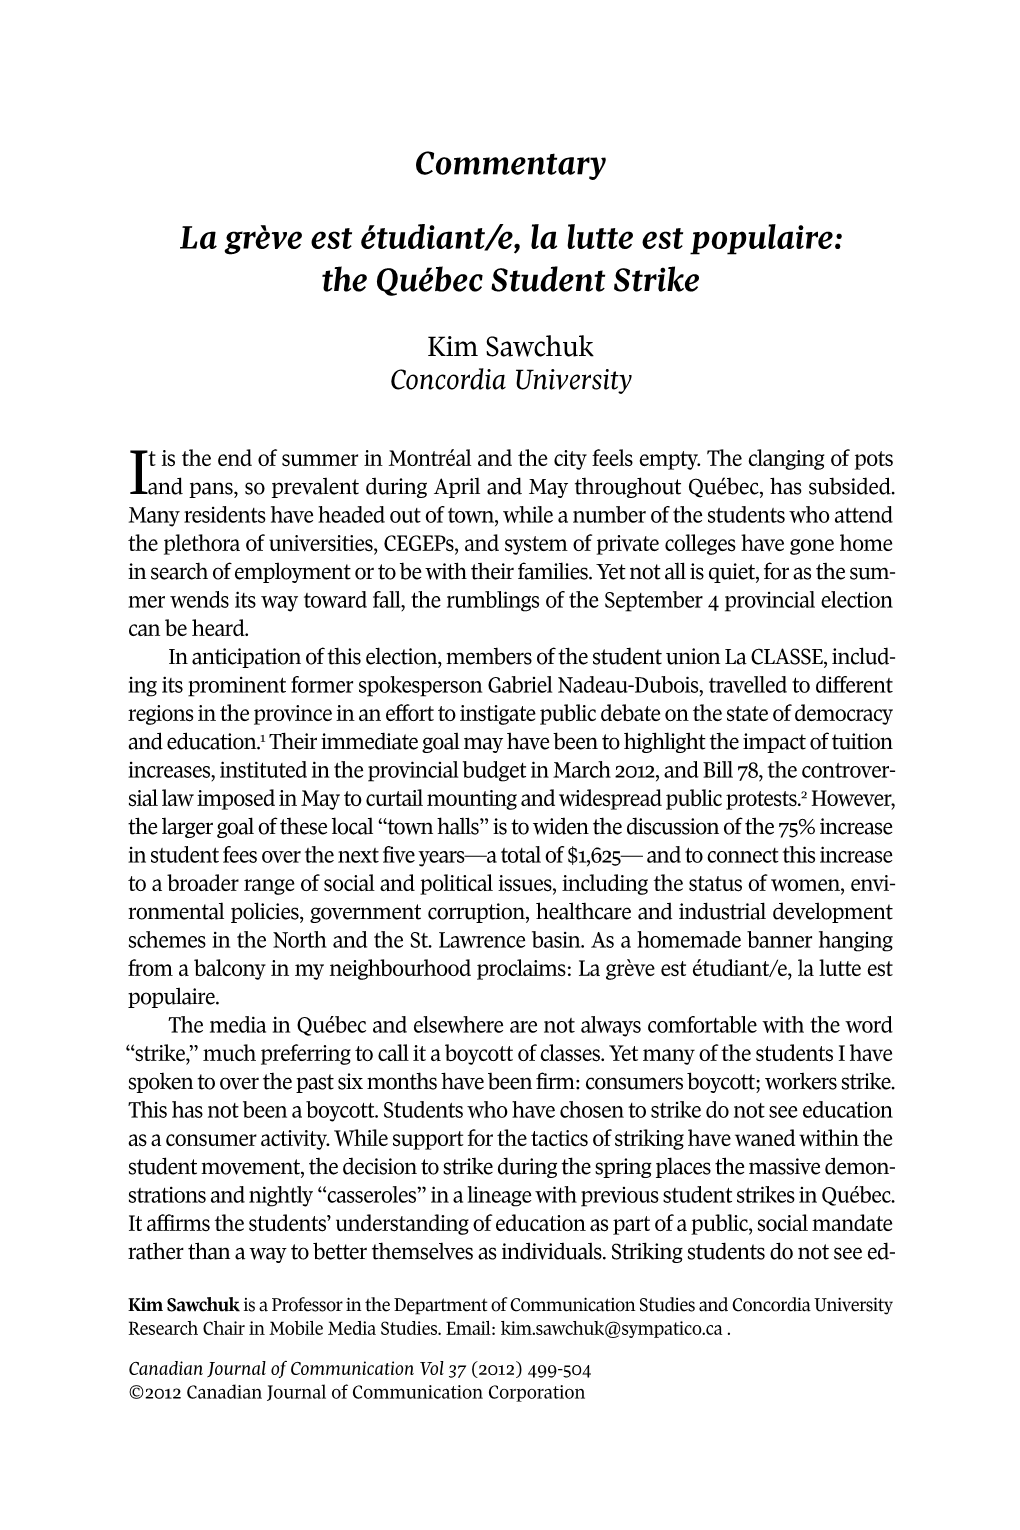 The Québec Student Strike